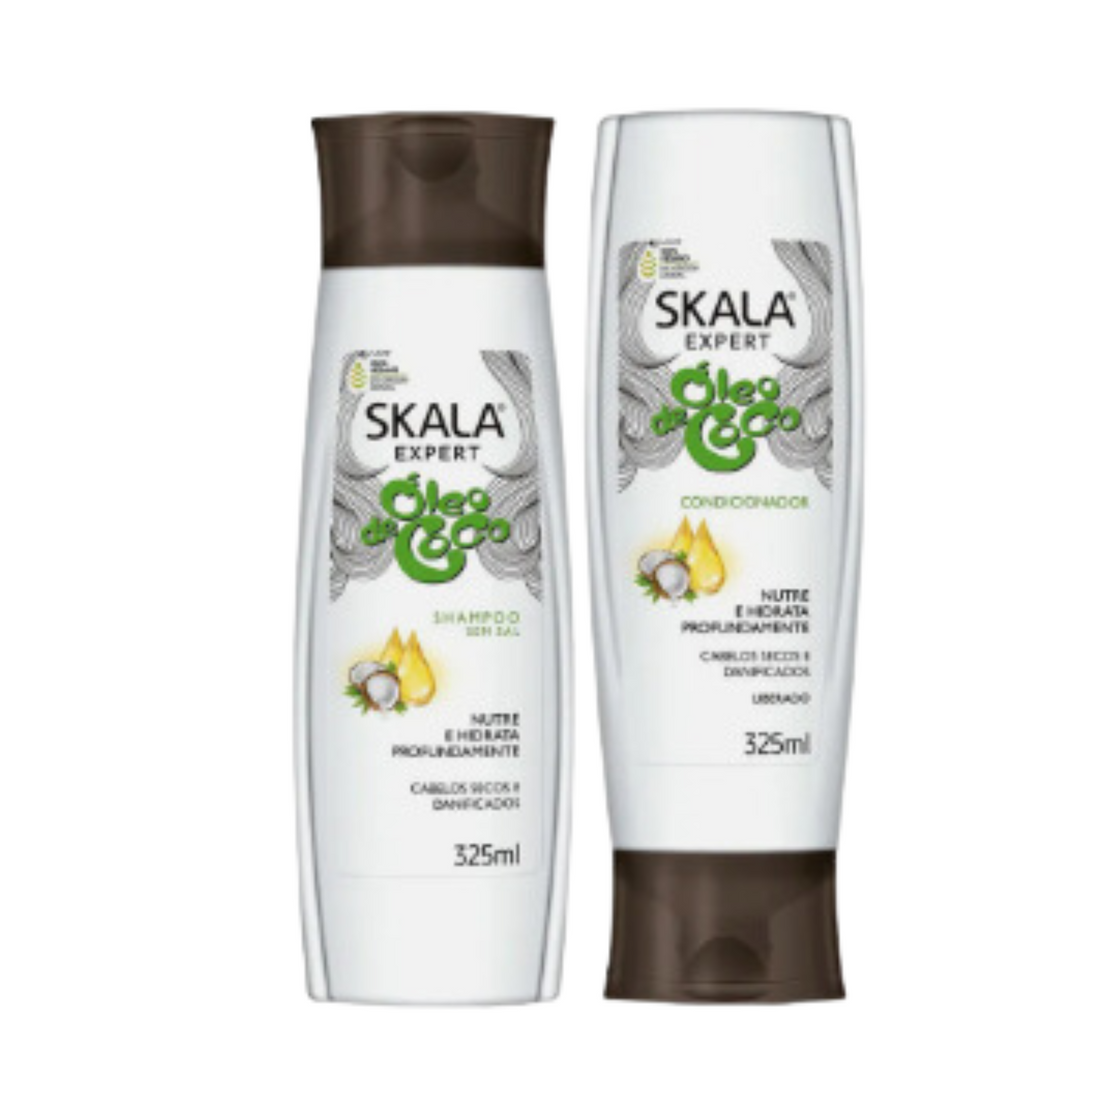 Skala Expert Coconut Oil Shampoo and Conditioner 2 x 325 ml | 2 x 10.9 oz